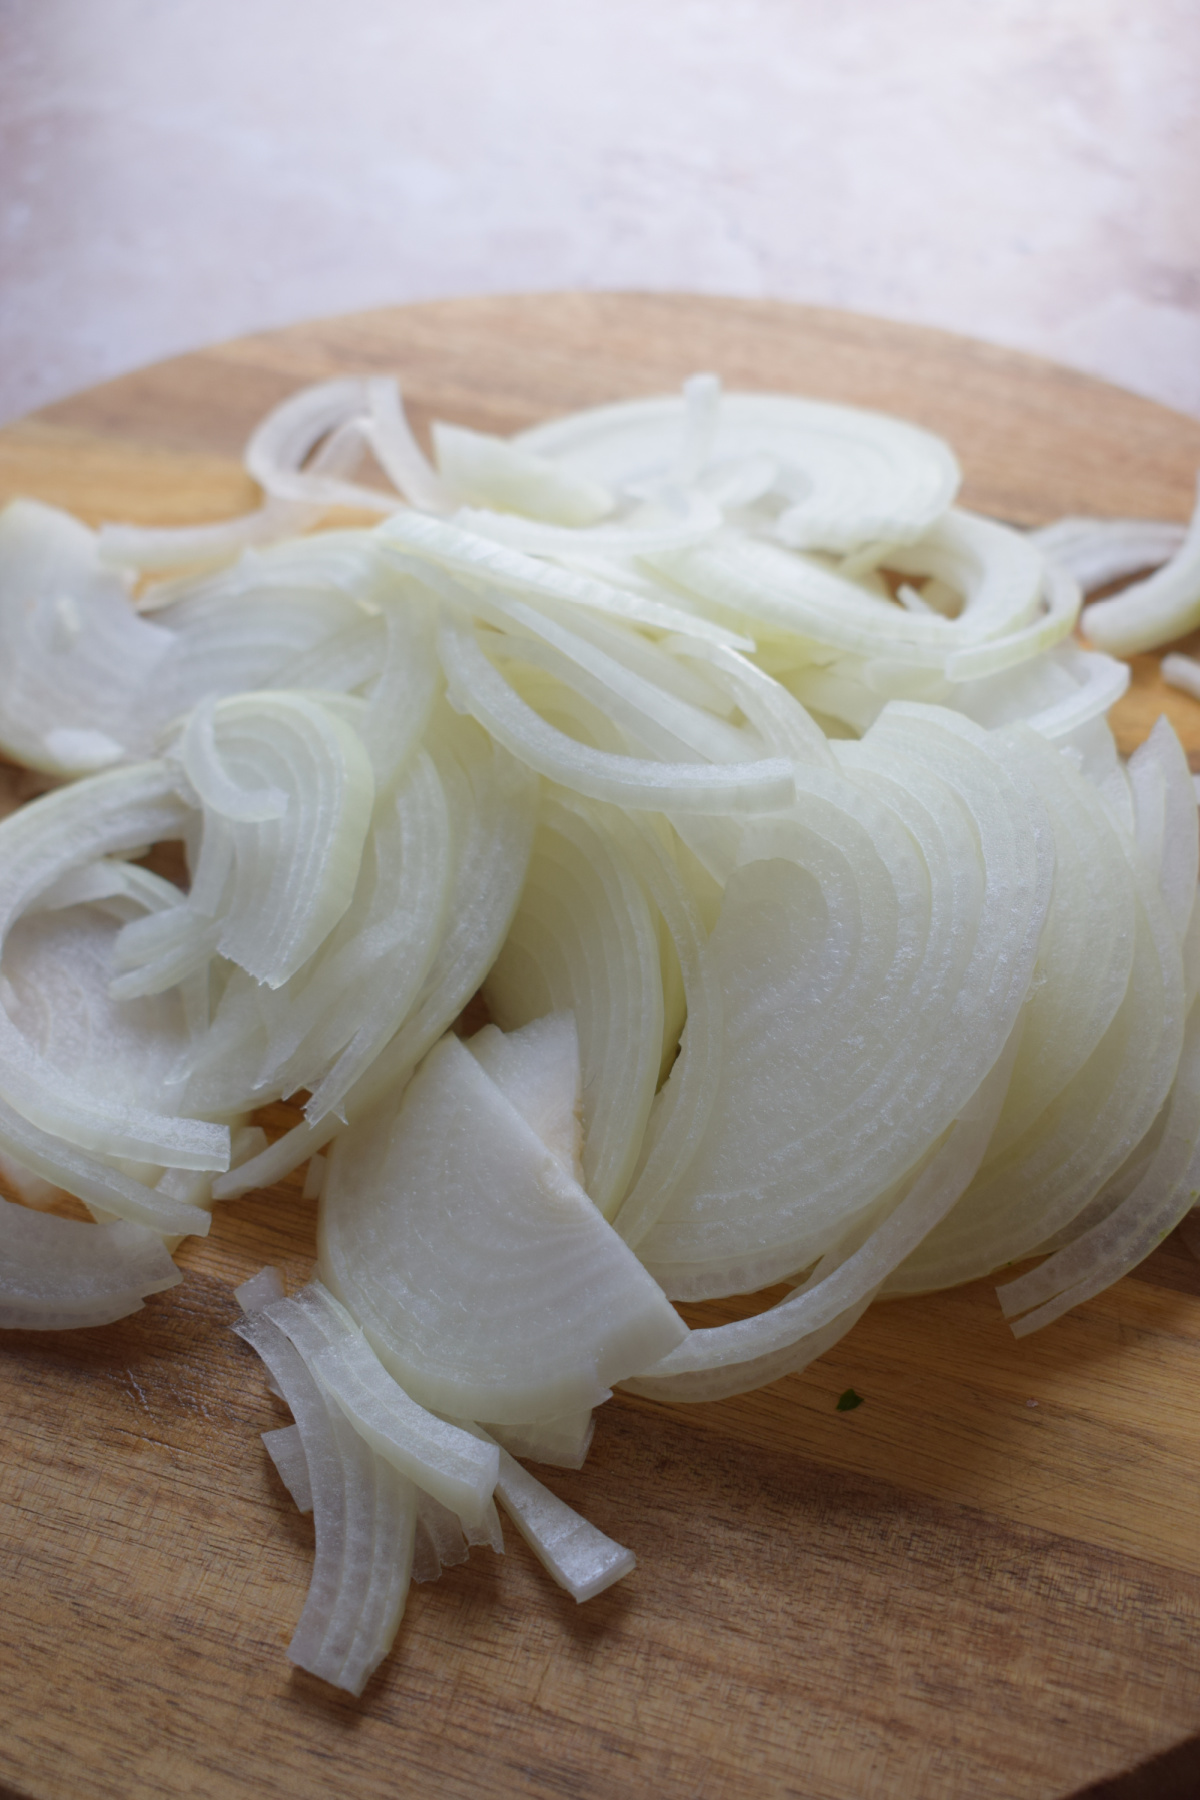 Caramelized Onion Gravy - Julia's Cuisine